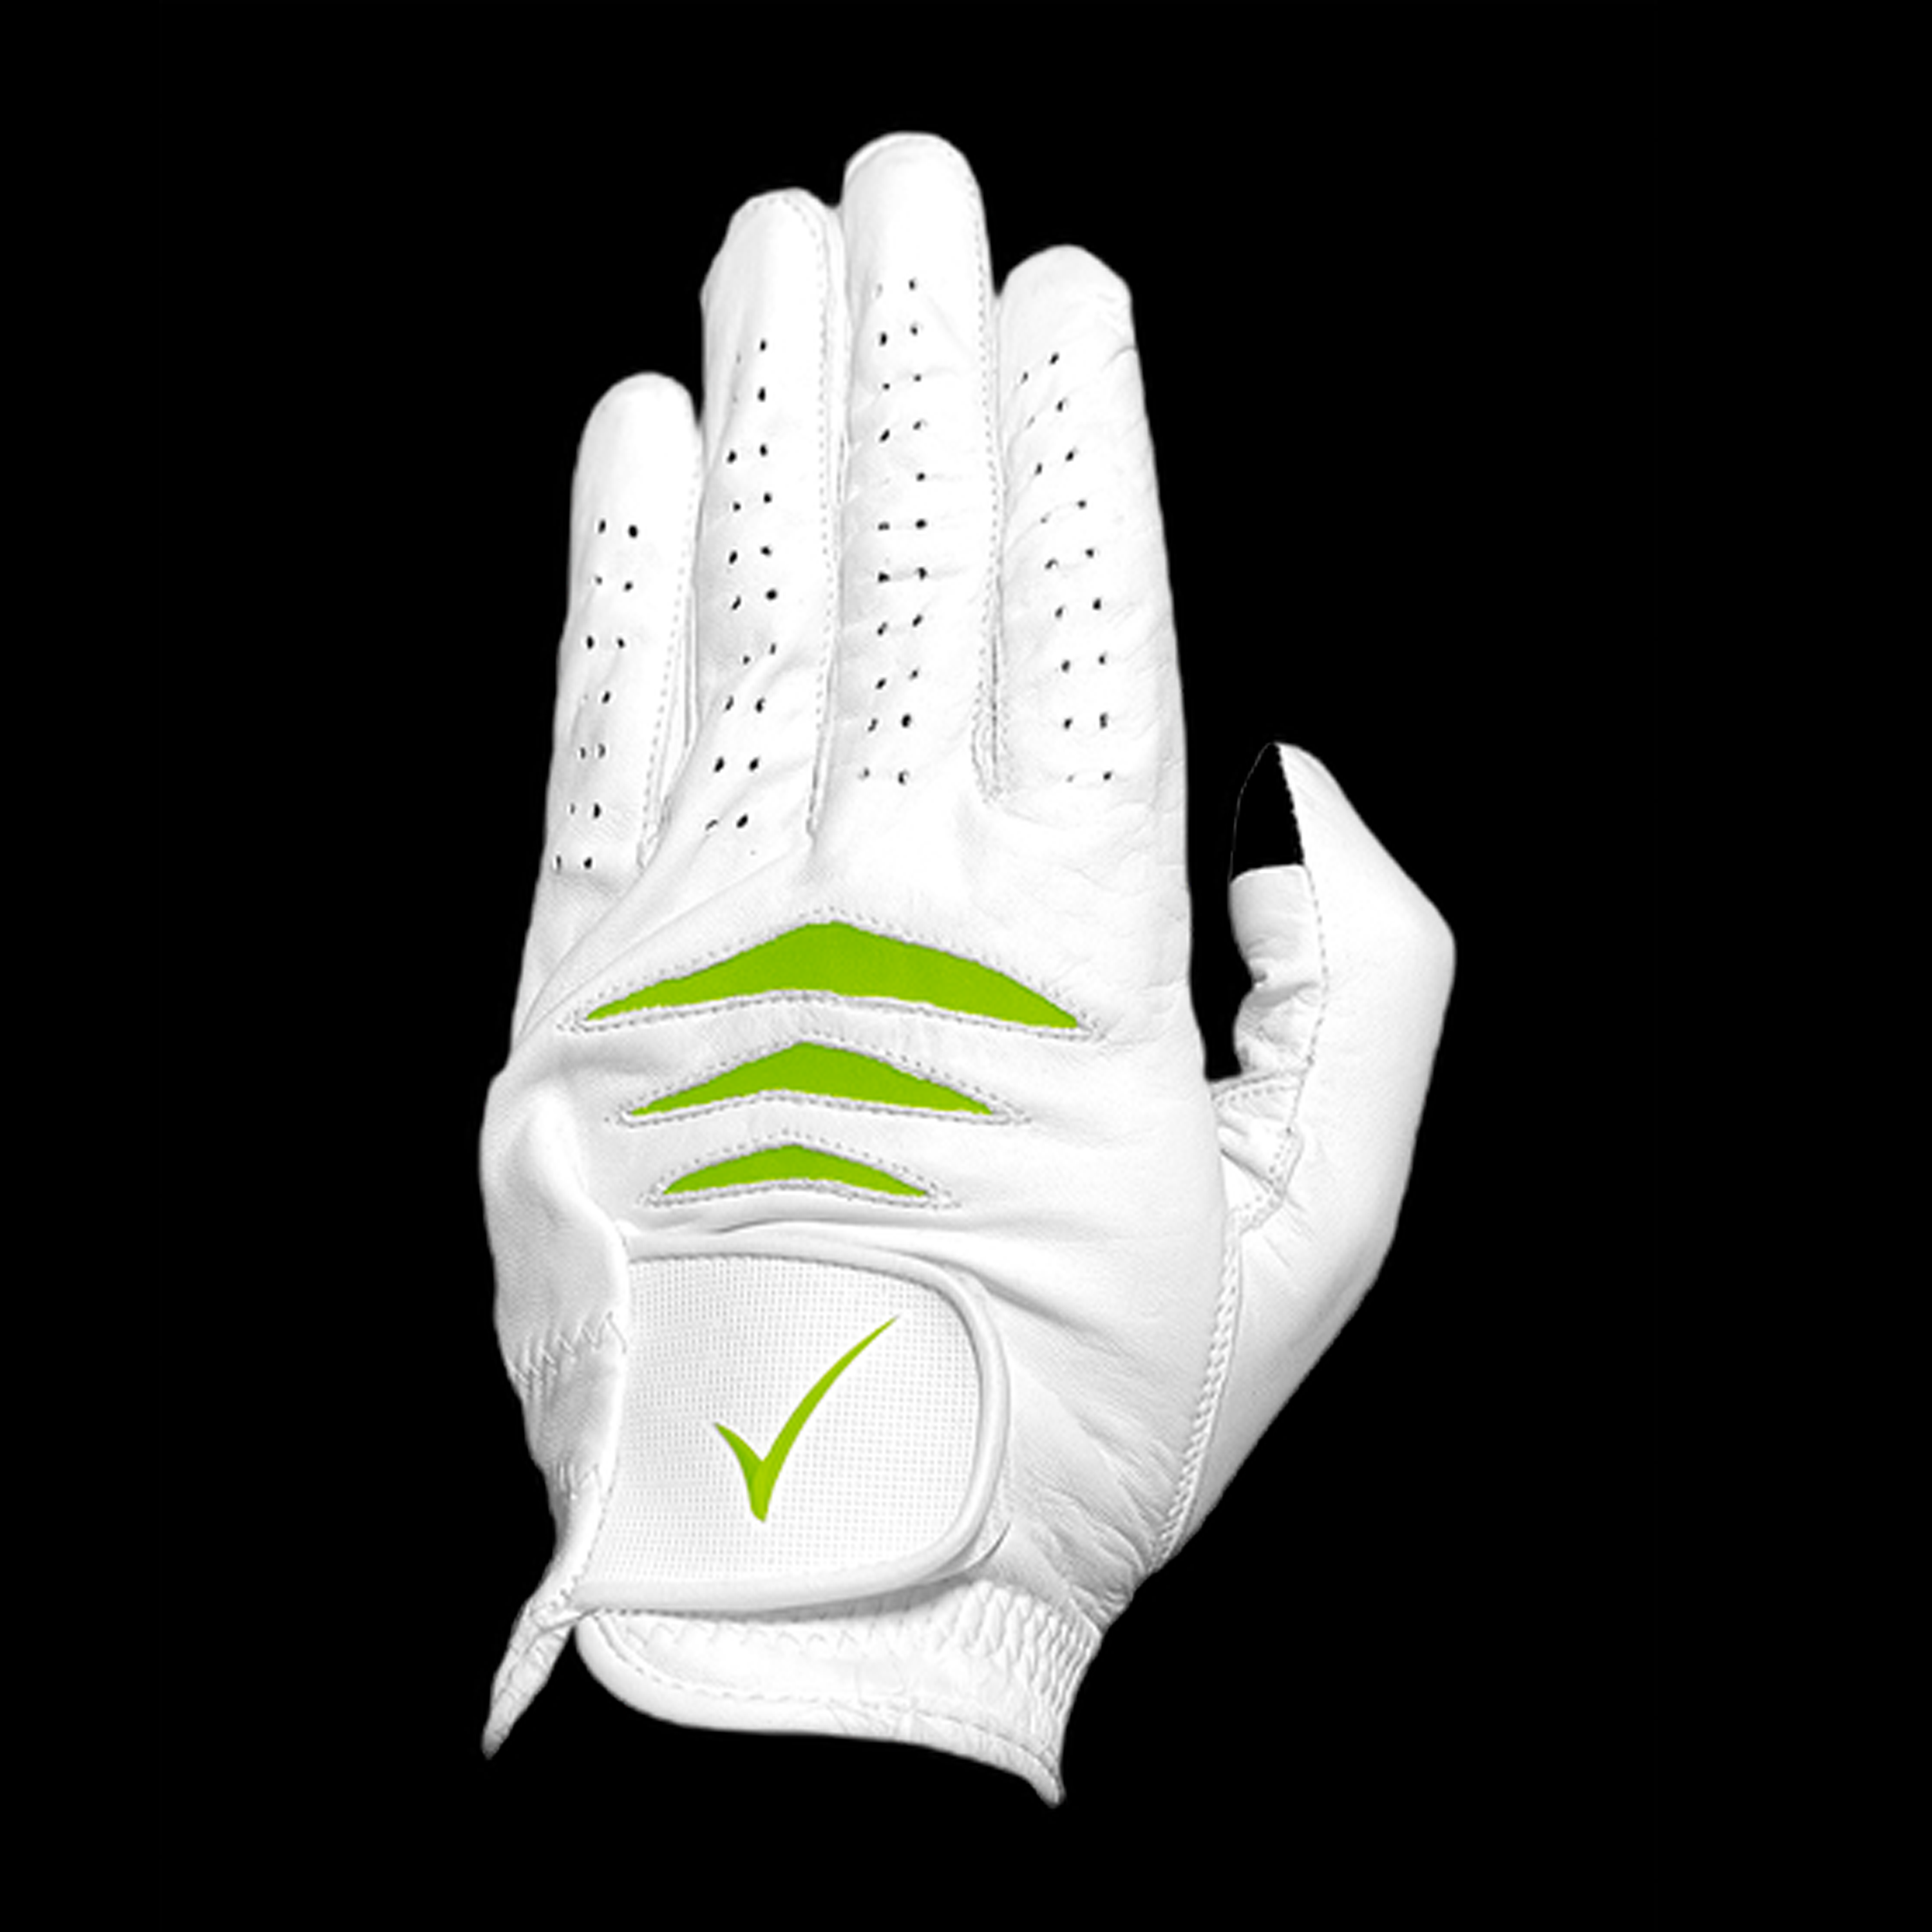 'Through Touch' Golf Glove - White/Green